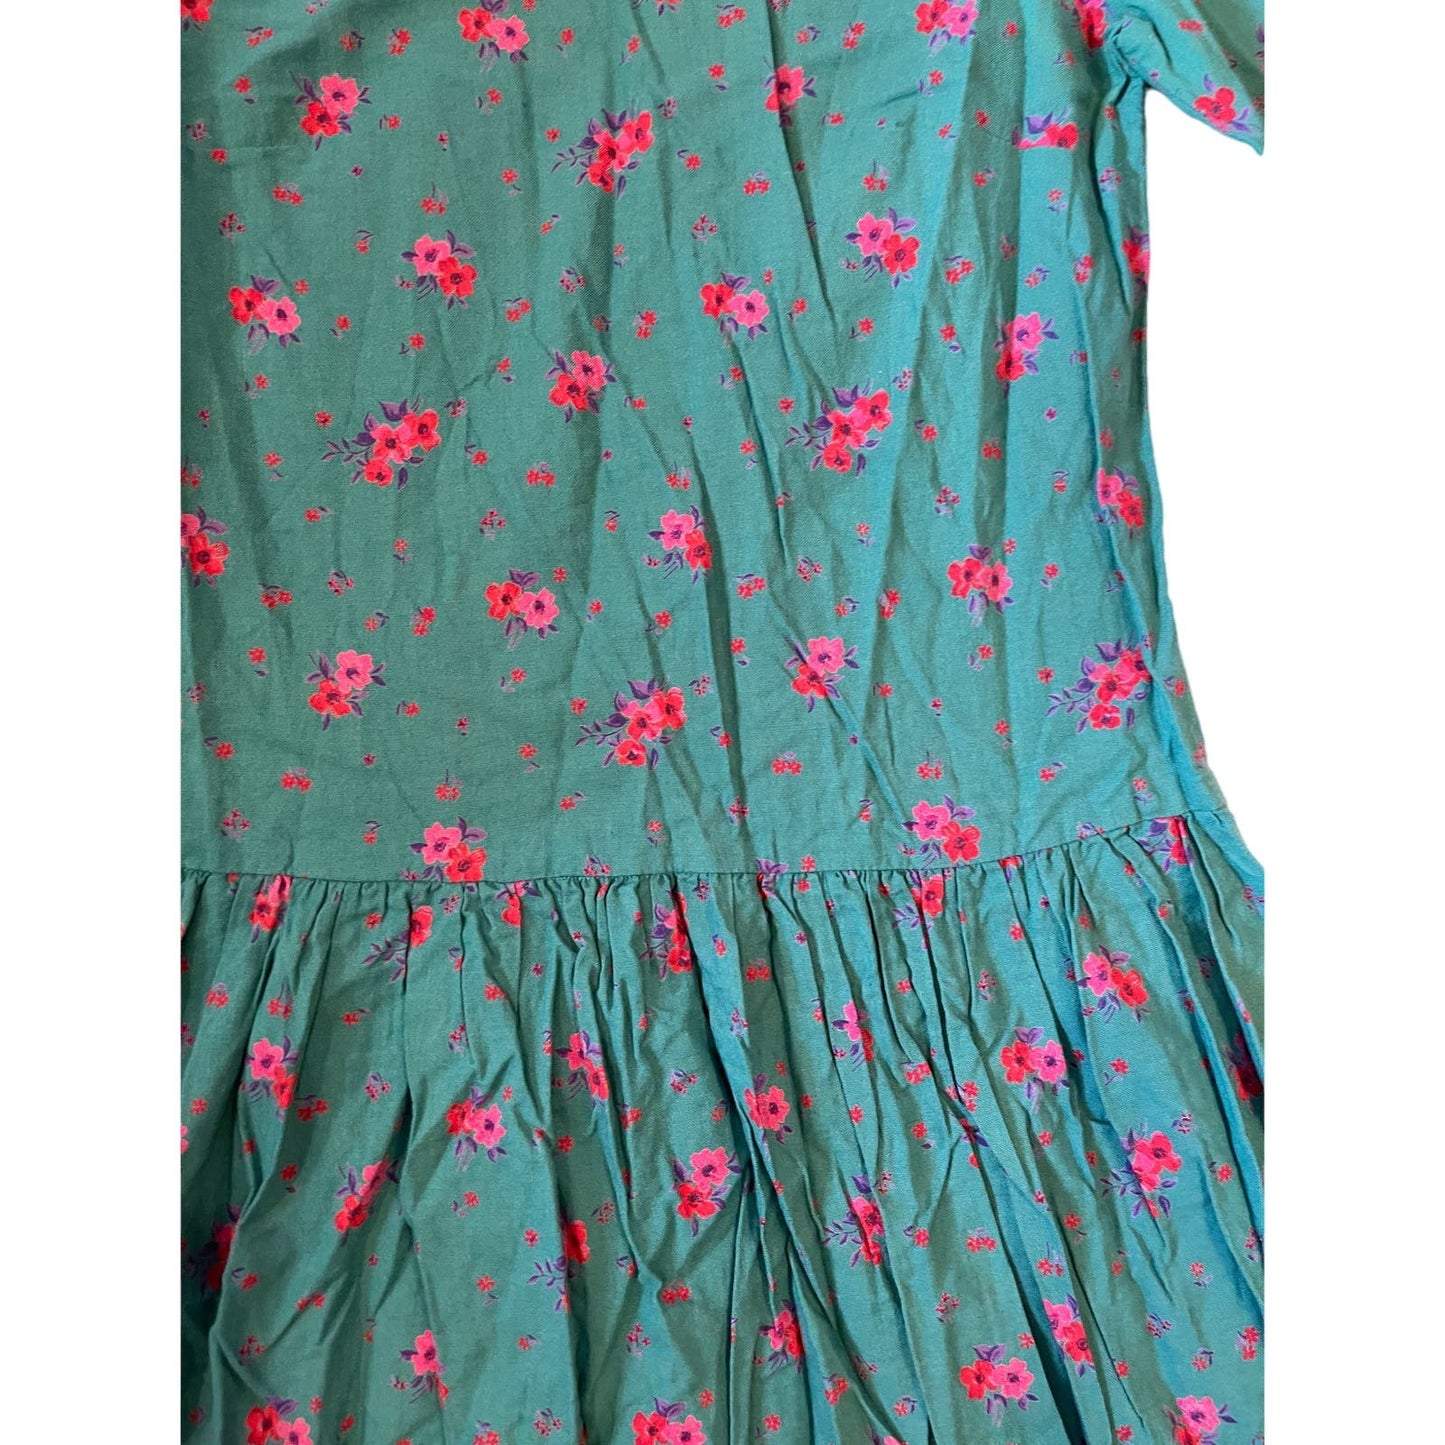 Jane Schaffhausen for Belle France Vintage Green Prairie Dress Size Small